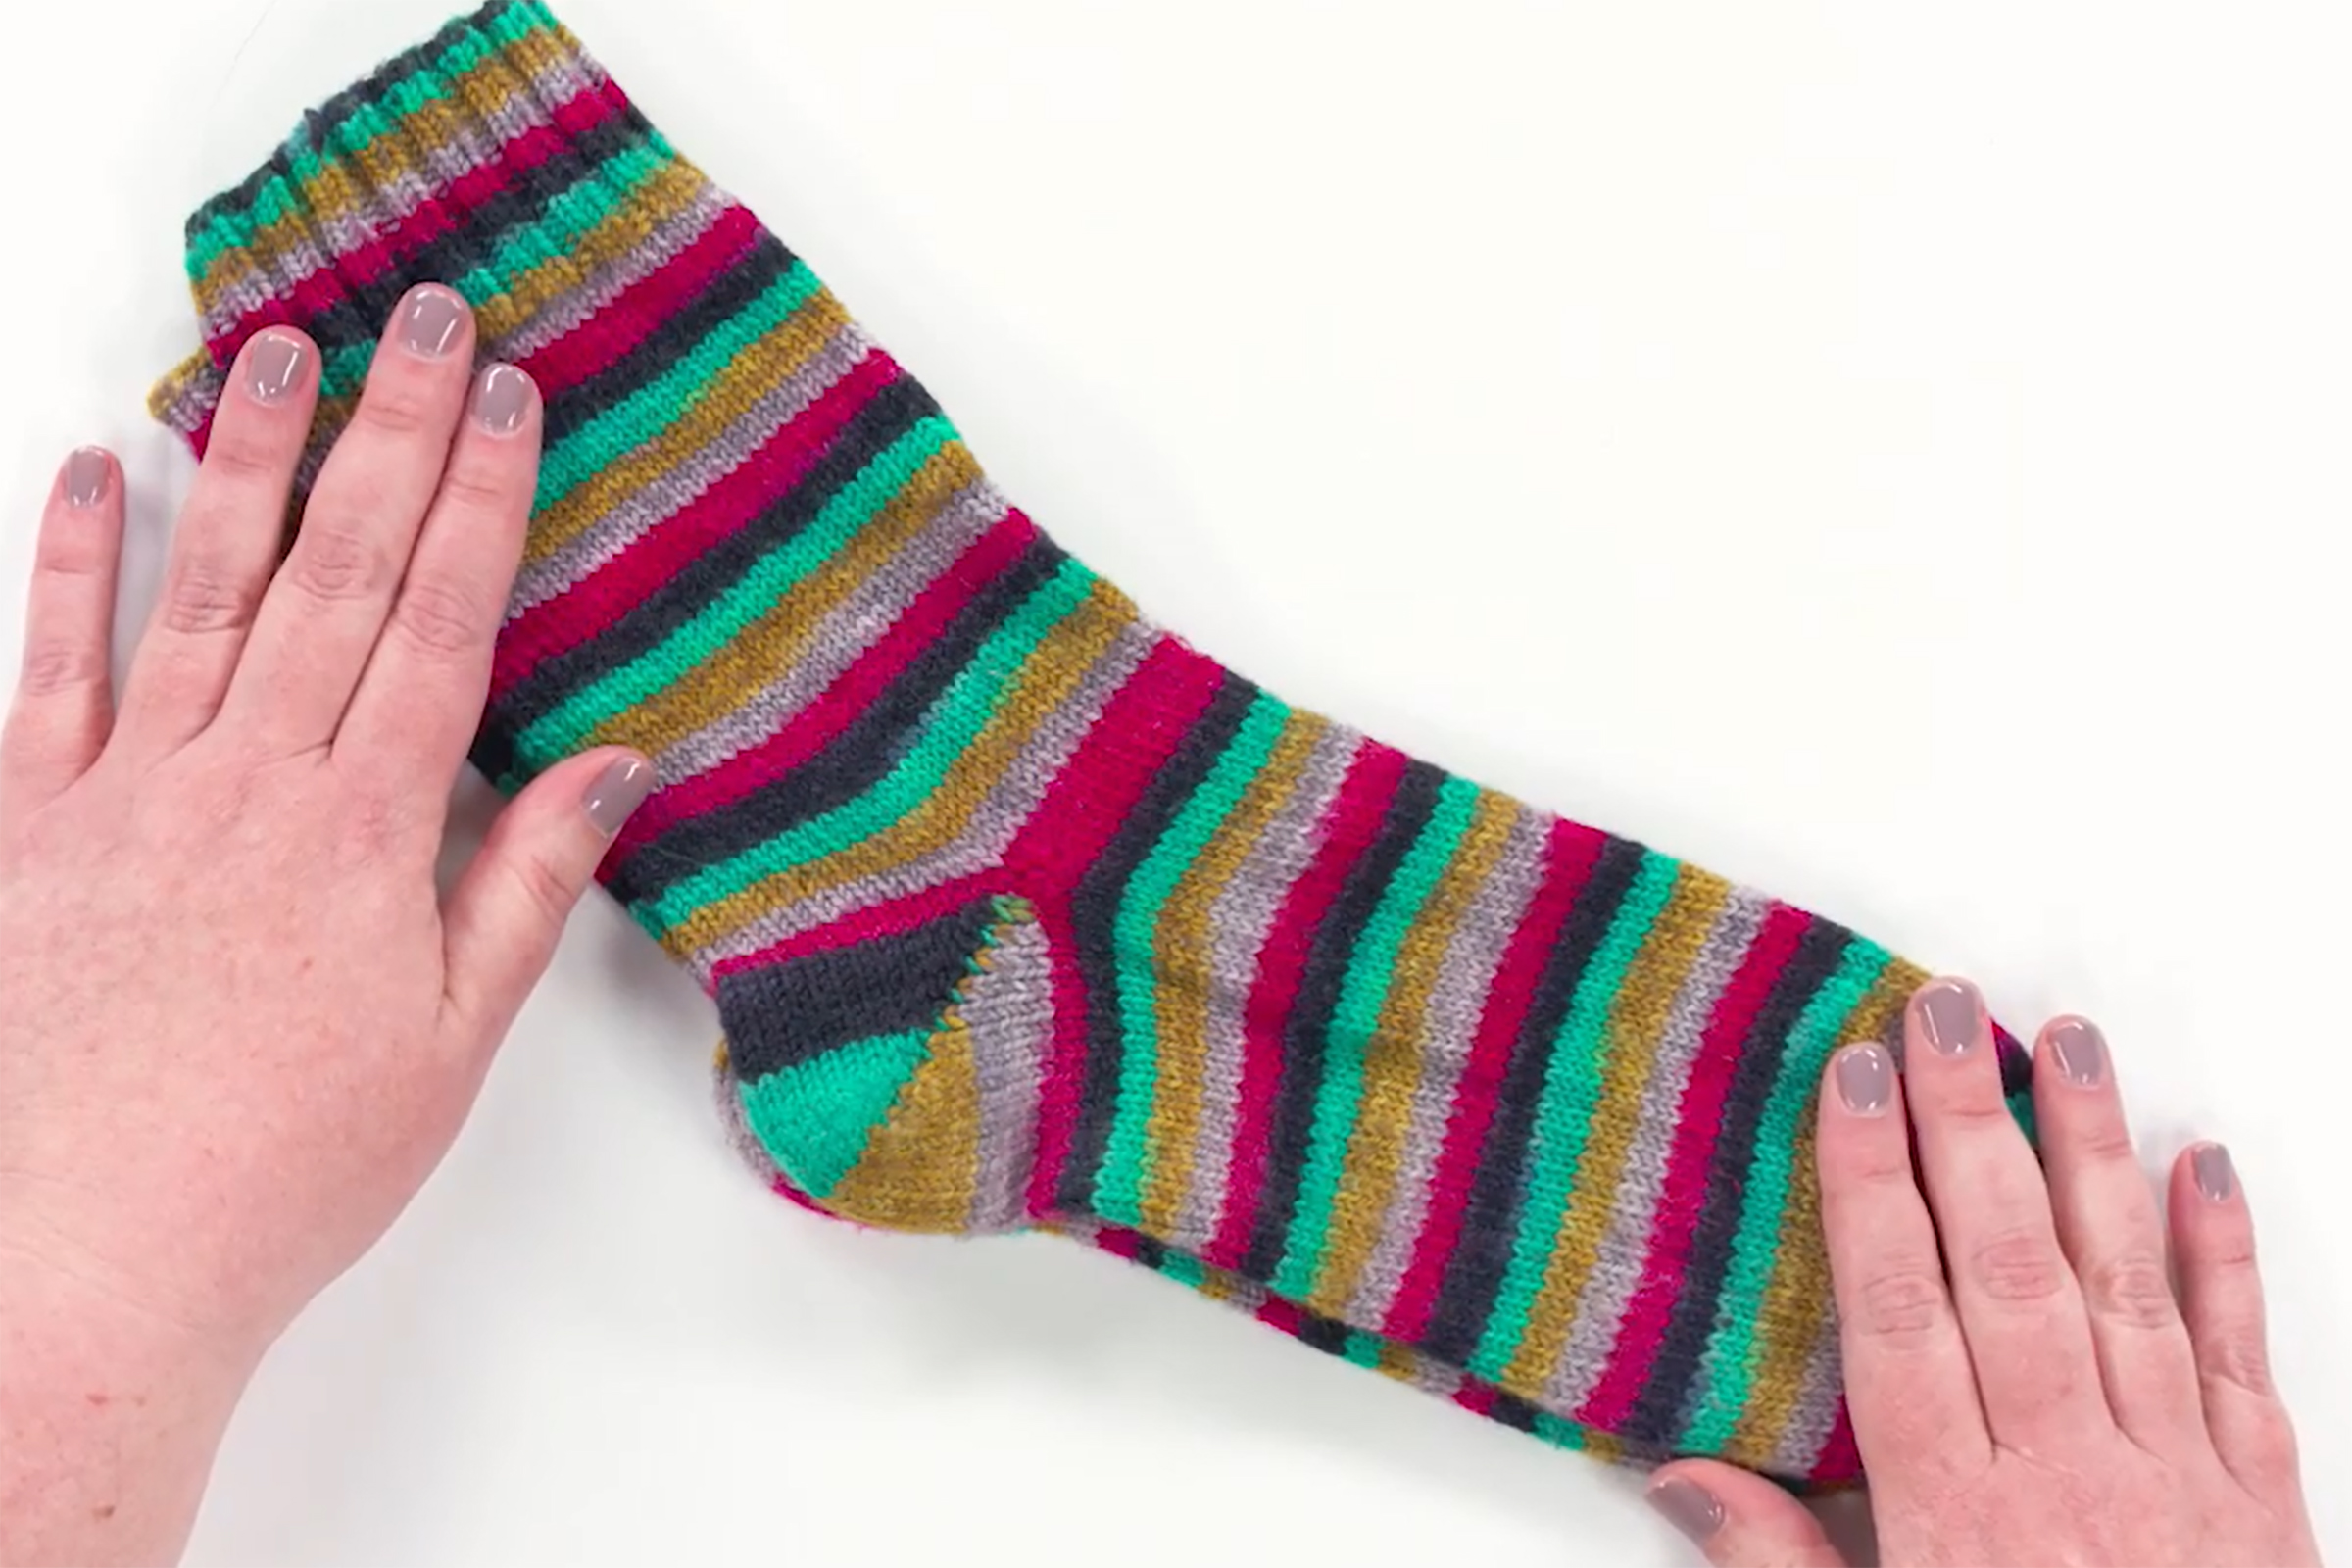 Bonus: Sock Yarn